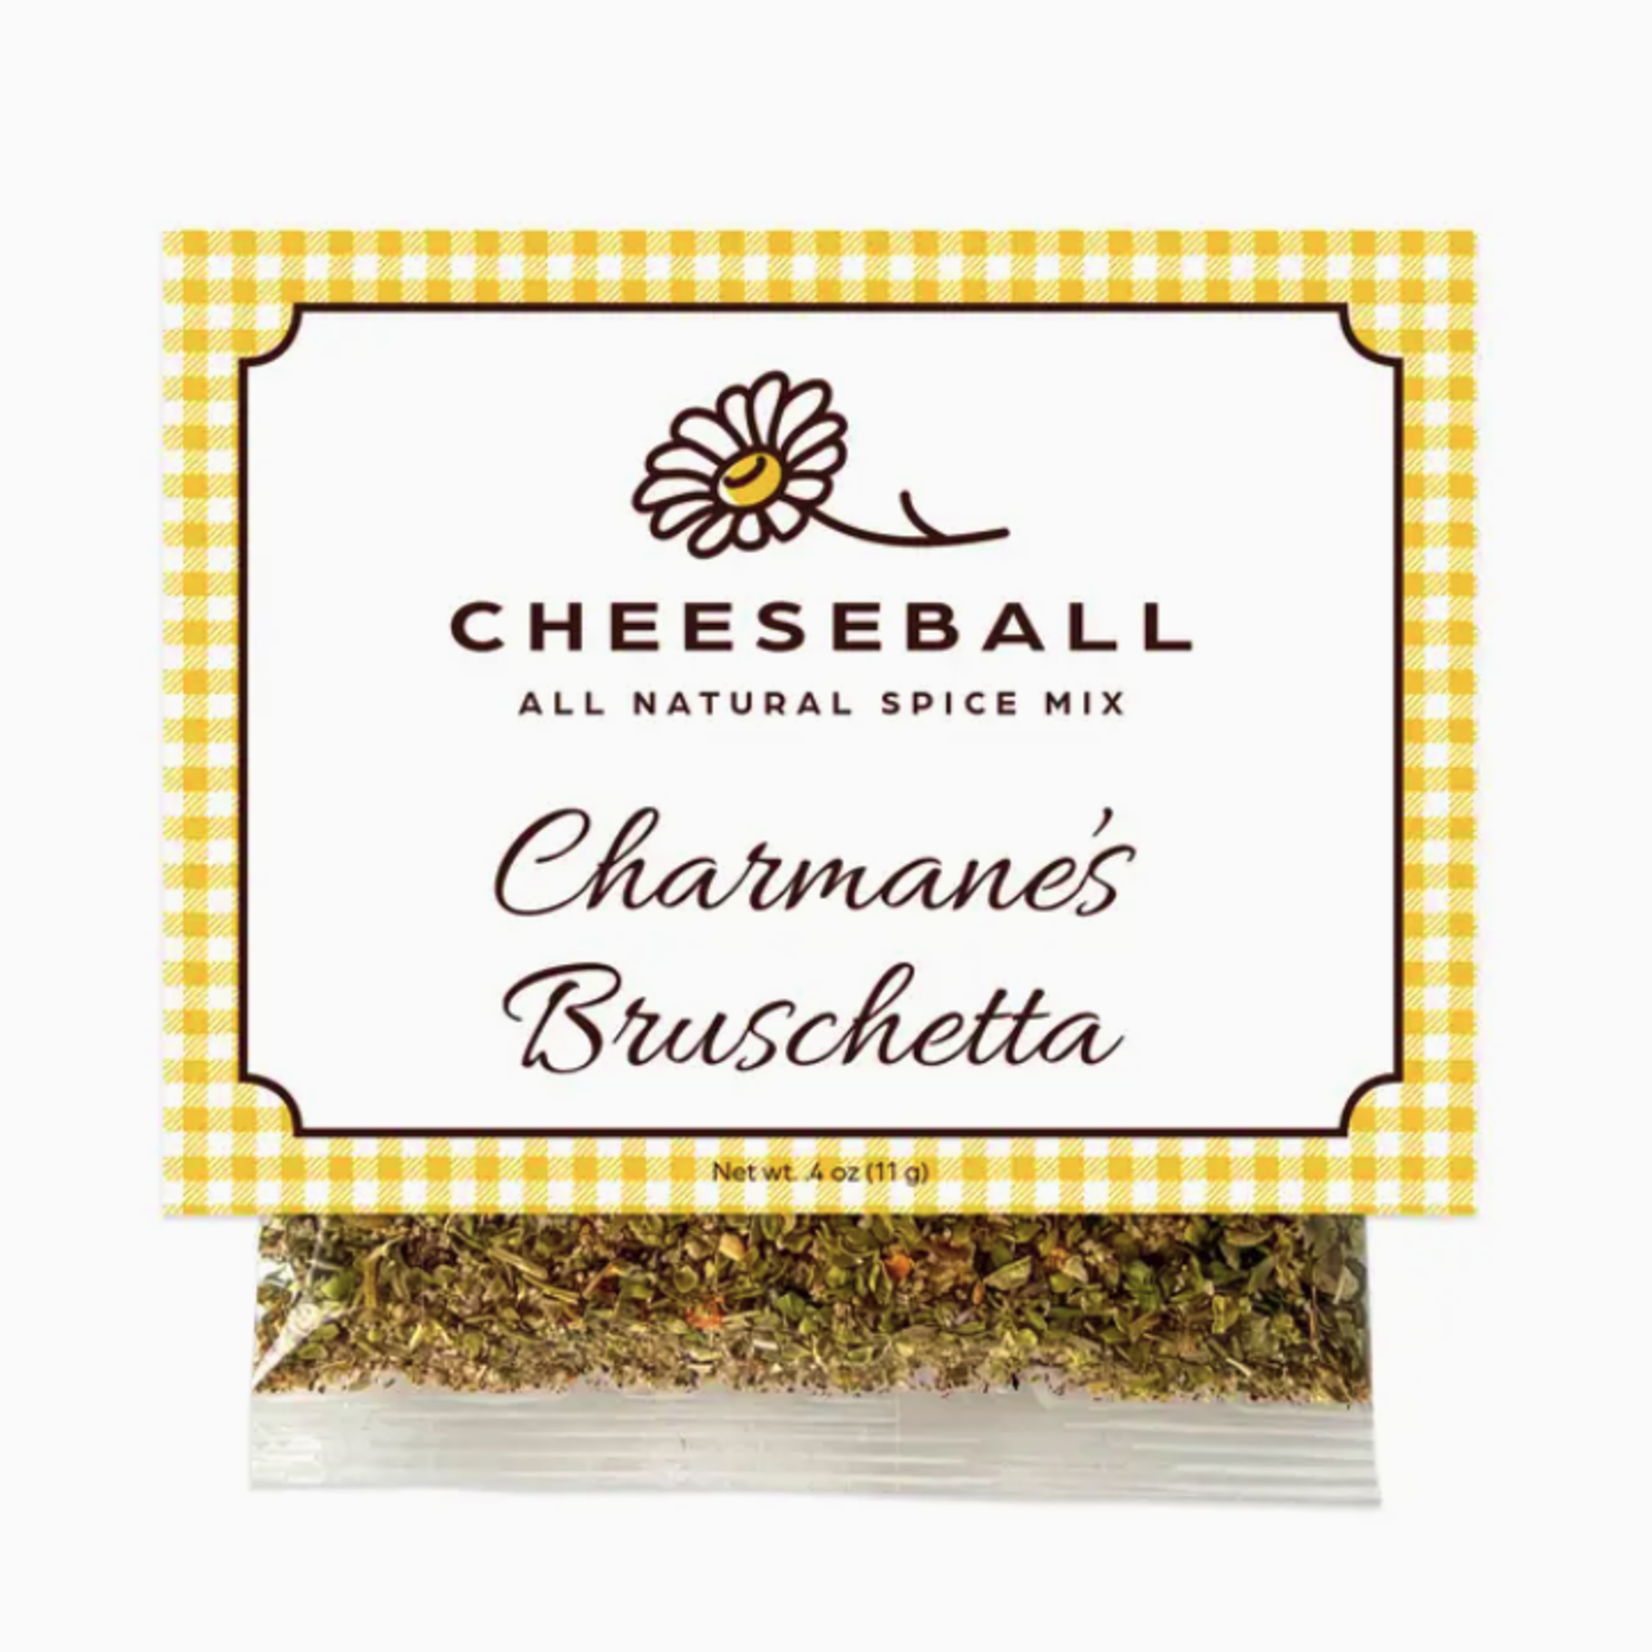 Salt Sisters Charmane's Bruschetta Cheeseball